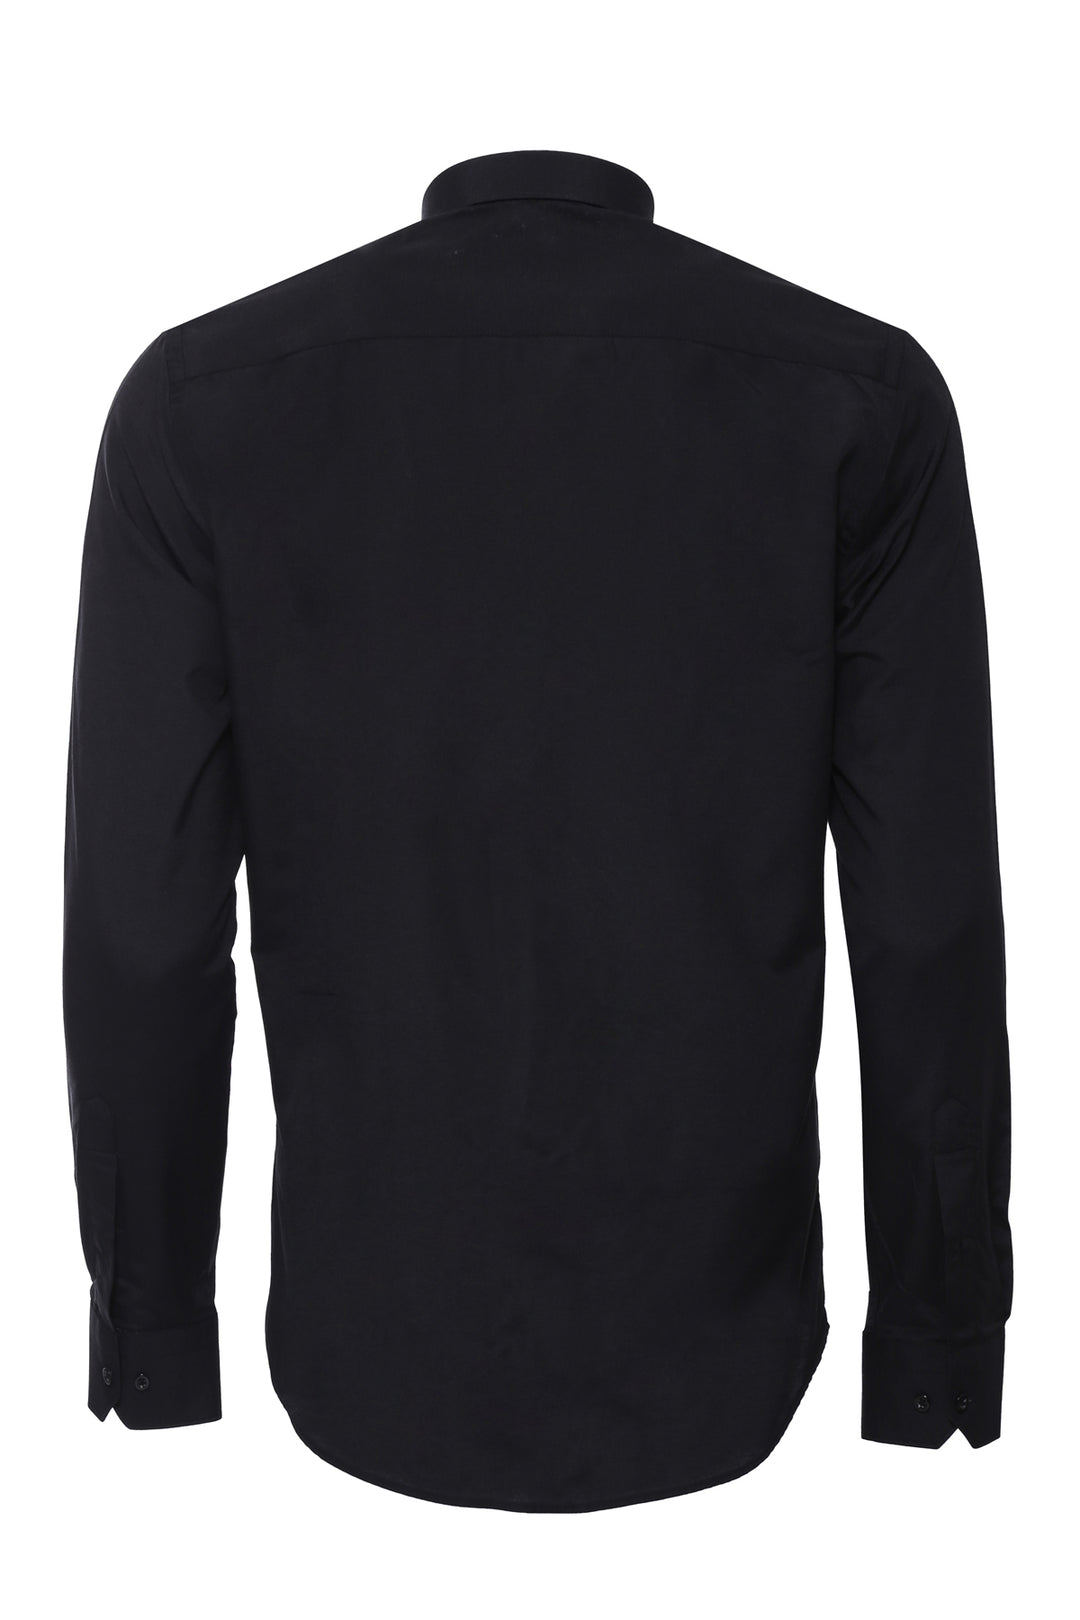 Plain Long Sleeves Regular Fit Black Men Shirt - Wessi